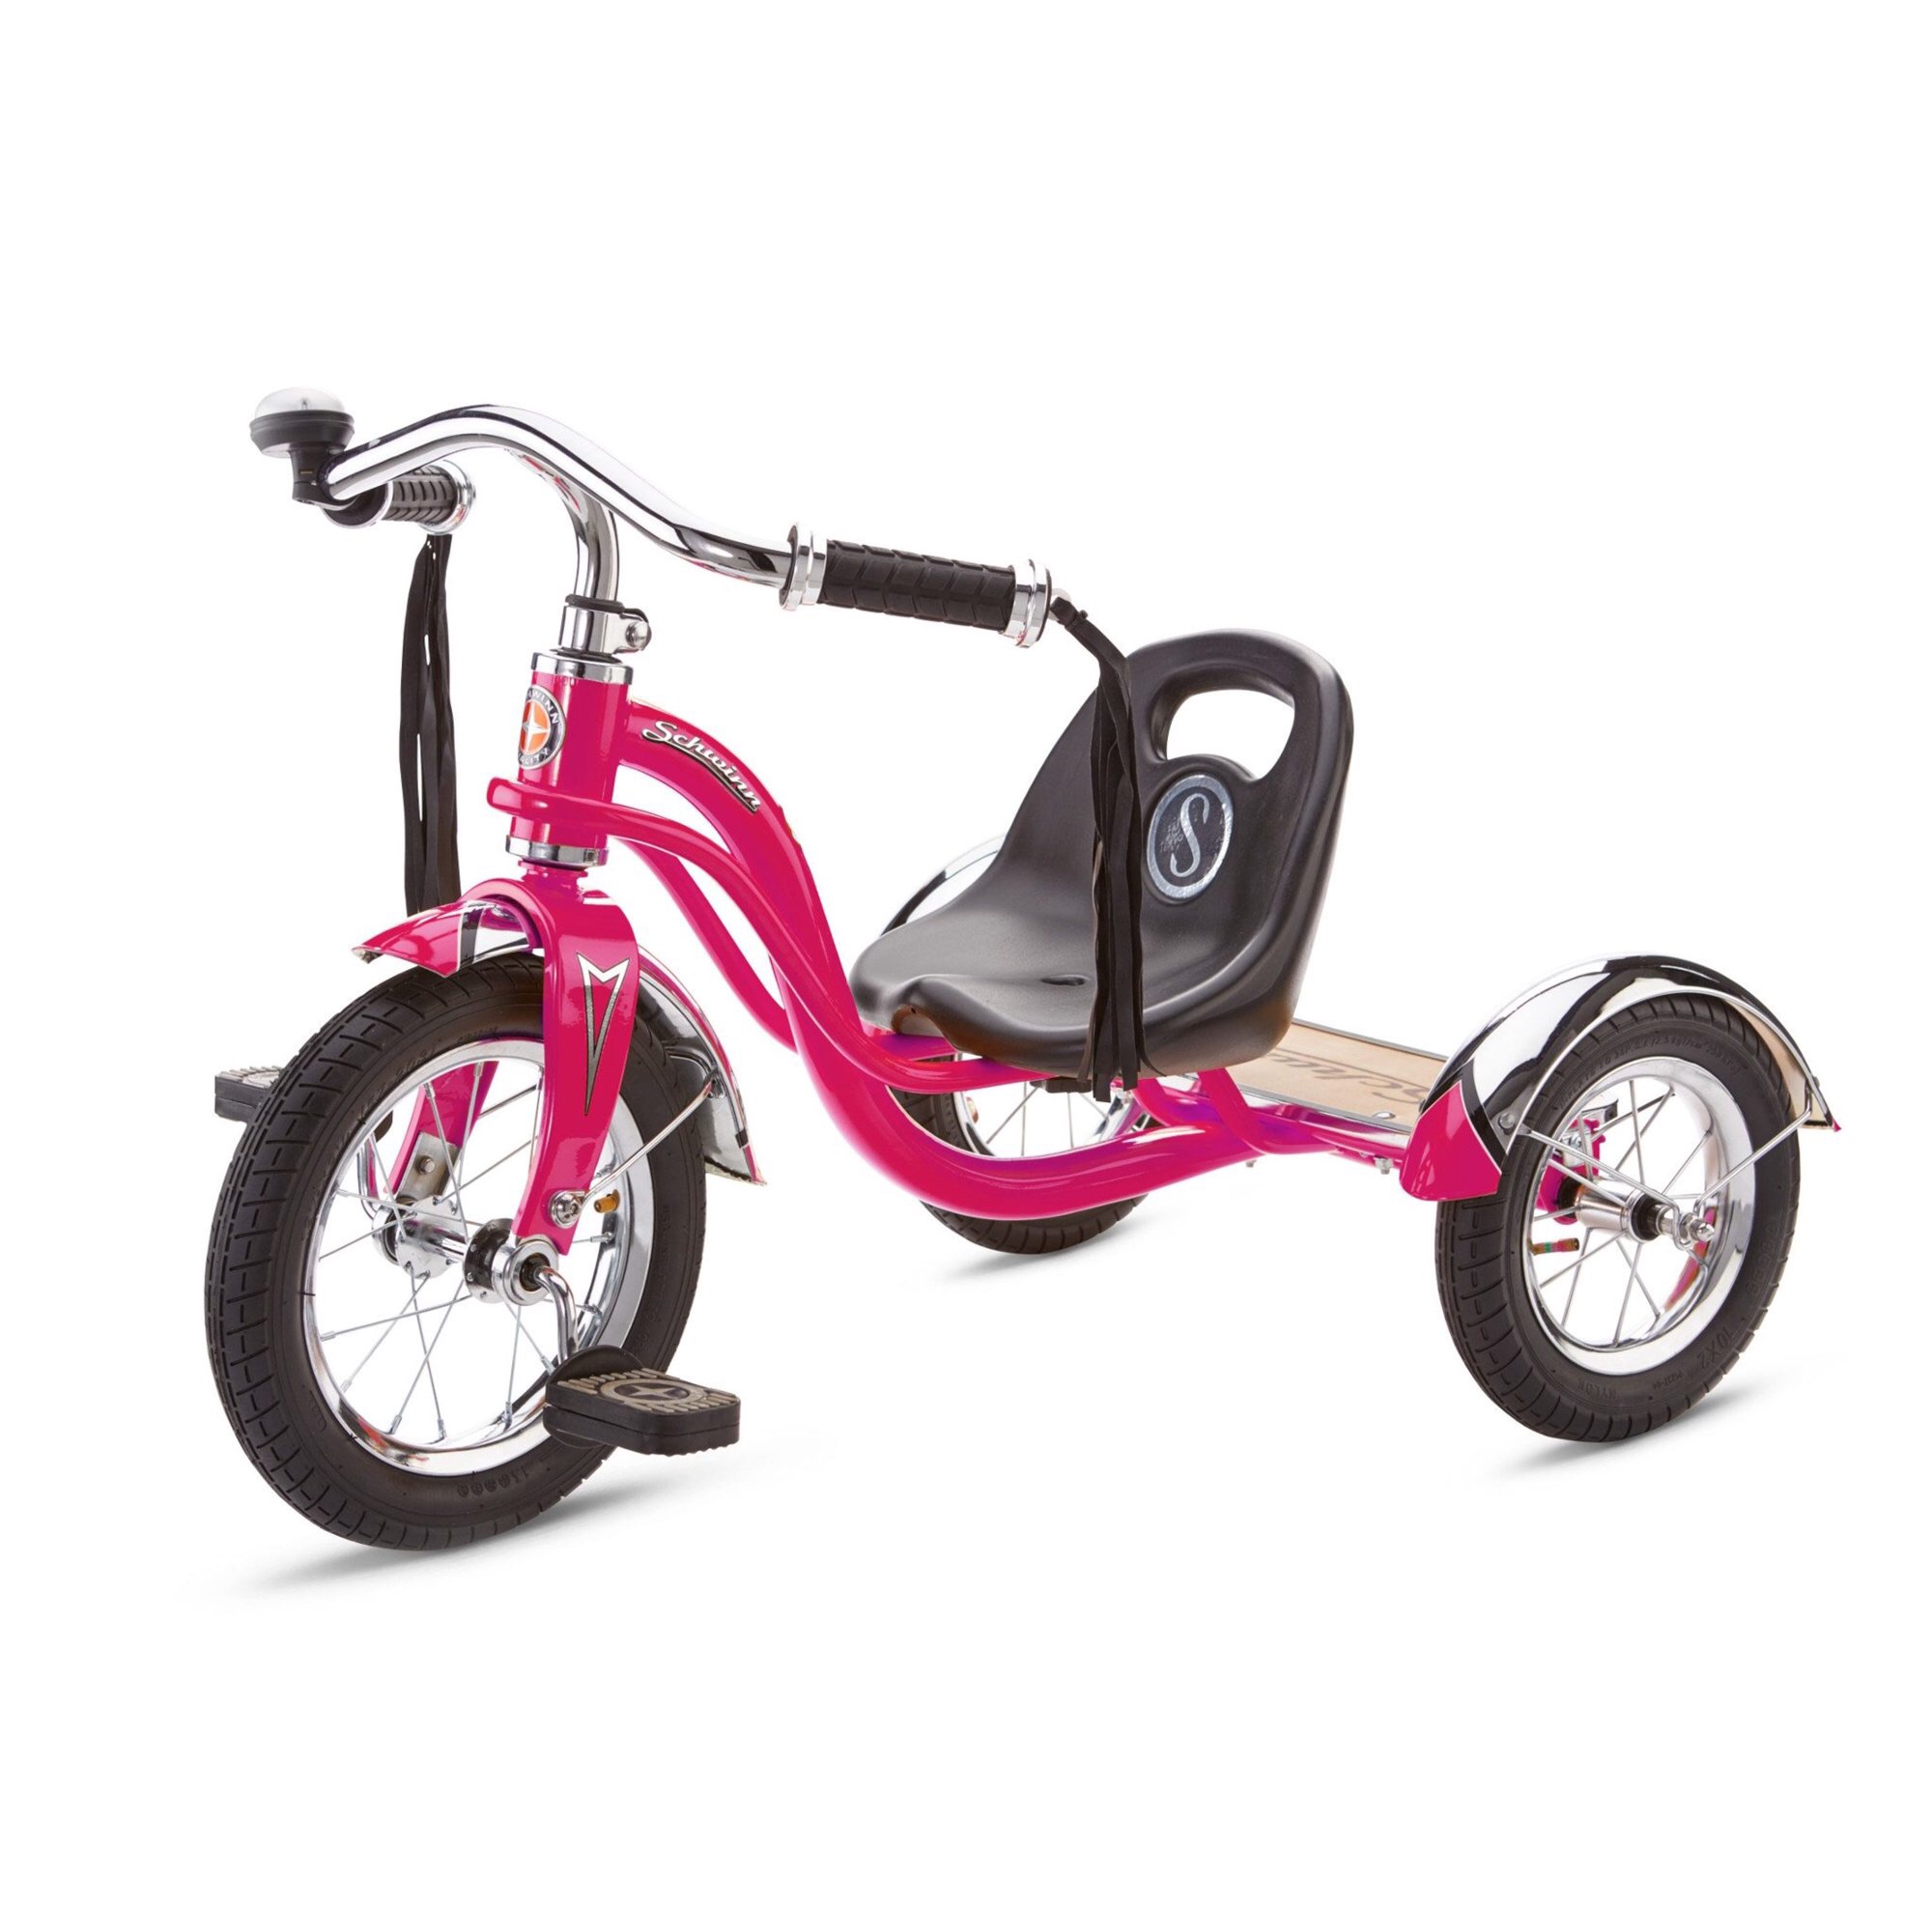 Schwinn Roadster Retro-Style Tricycle, 12-inch front wheel, ages 2 - 4, hot pink - Walmart.com - Walmart.com 儿童小三轮车